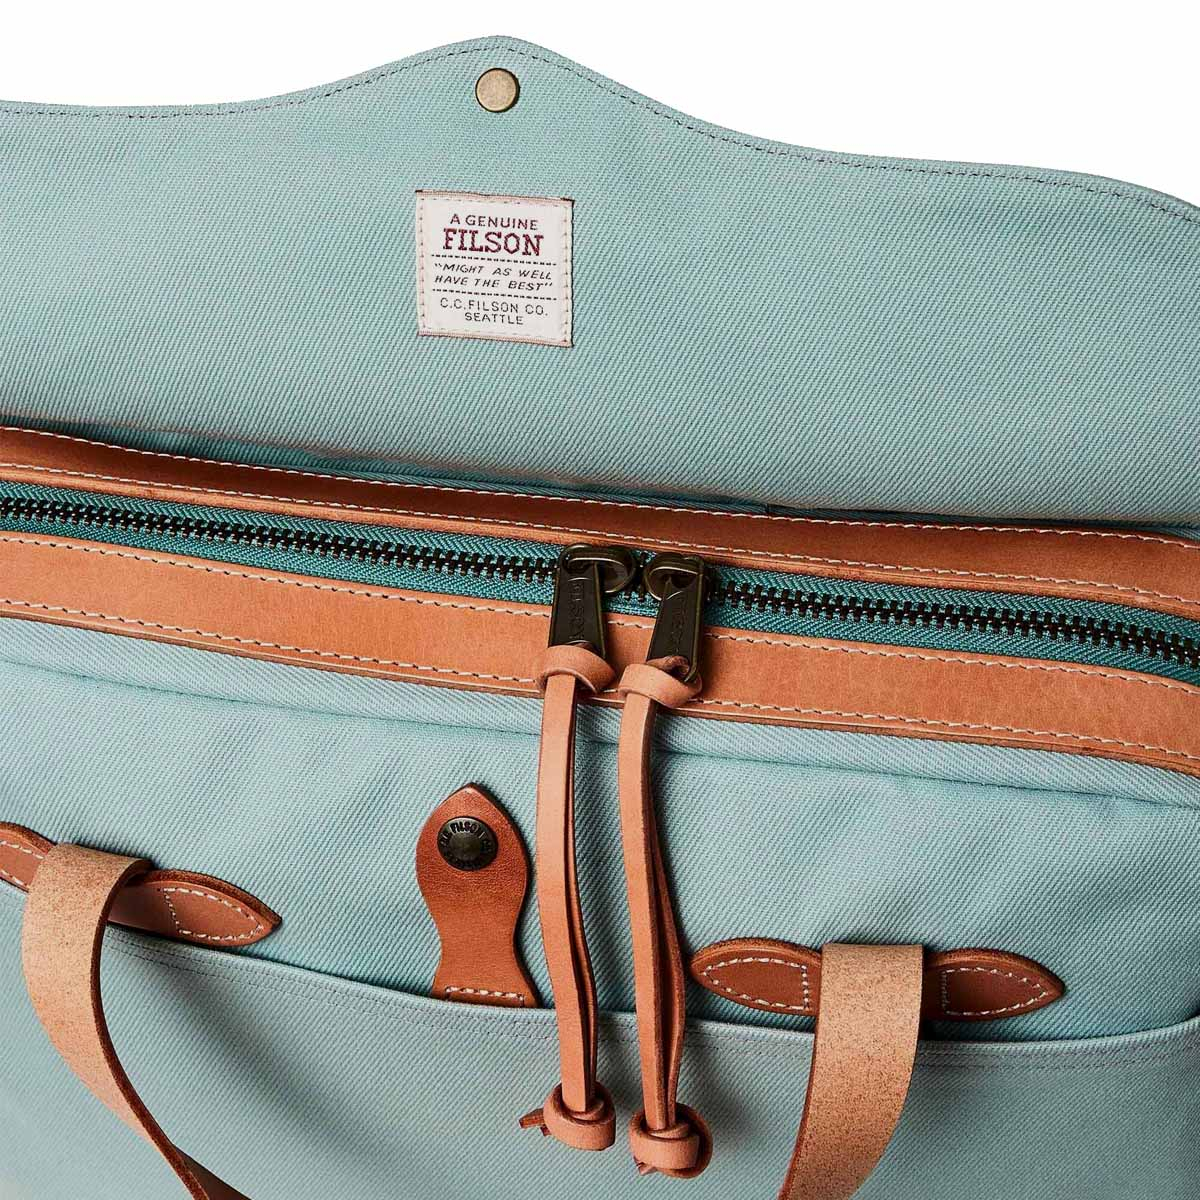 Filson Original Briefcase Lake Green, extraordinary bag for an ordinary day